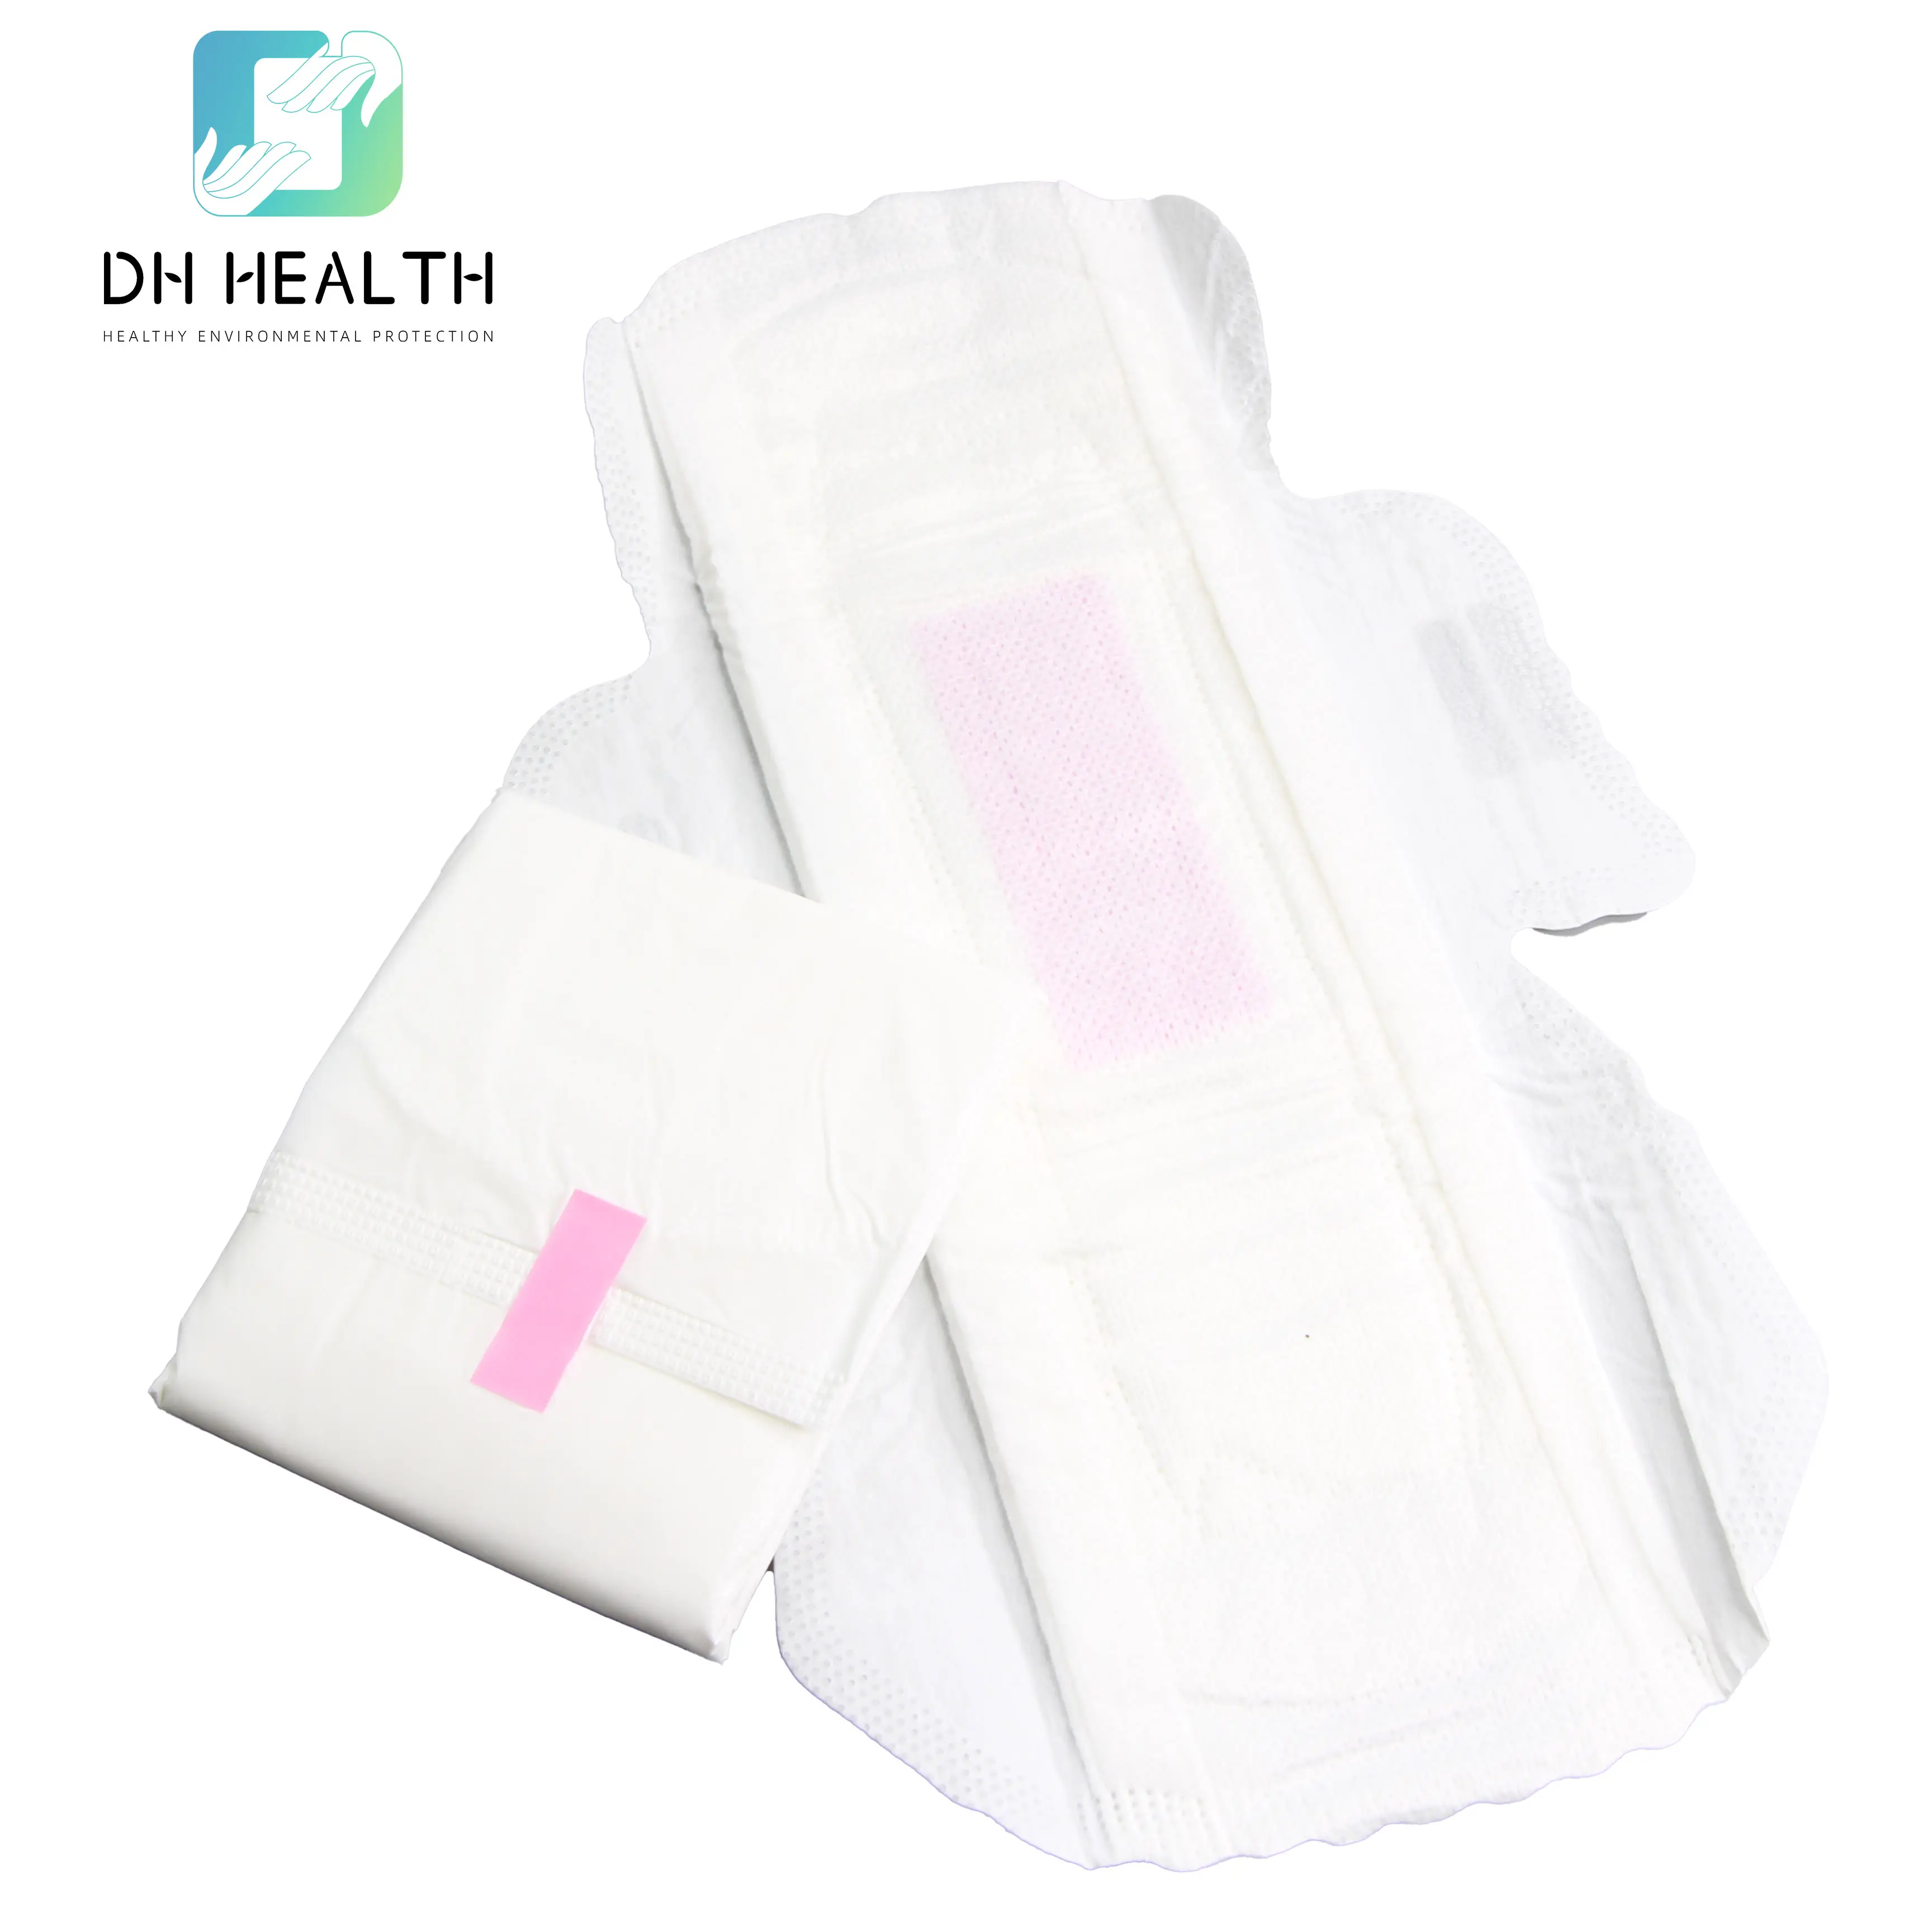 Customized design Best Price DH HEALTH Comfortable women pads feminine sanitary napkin